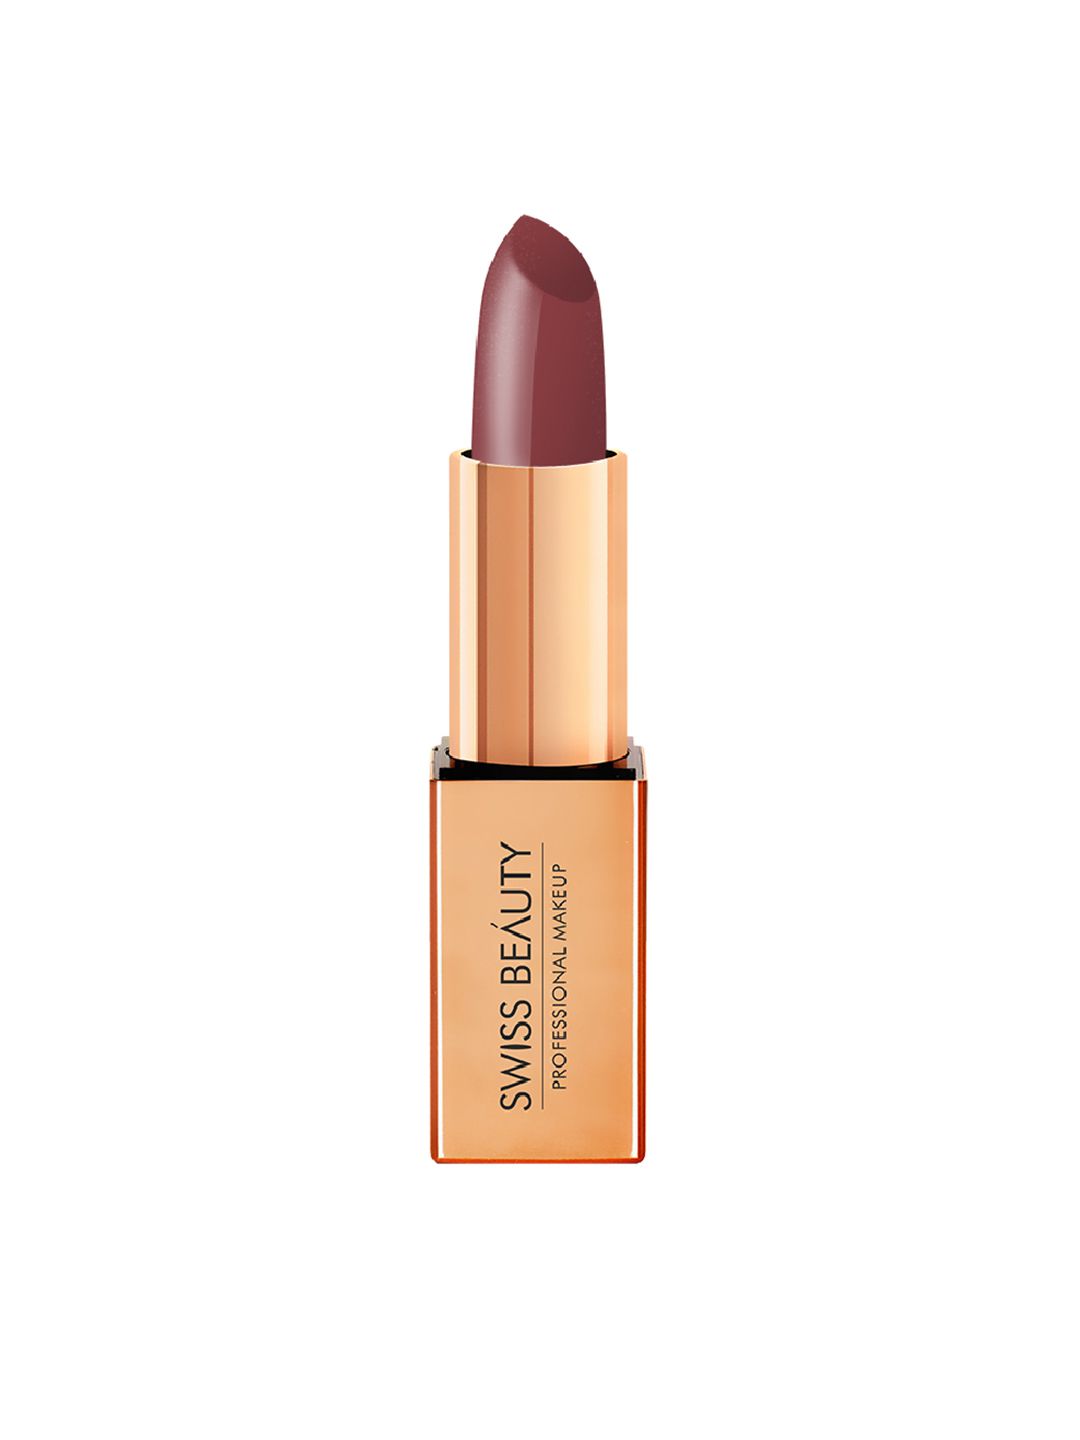 SWISS BEAUTY Silk Matte Lipstick 3.5 gm - Cherry Darling 04 Price in India